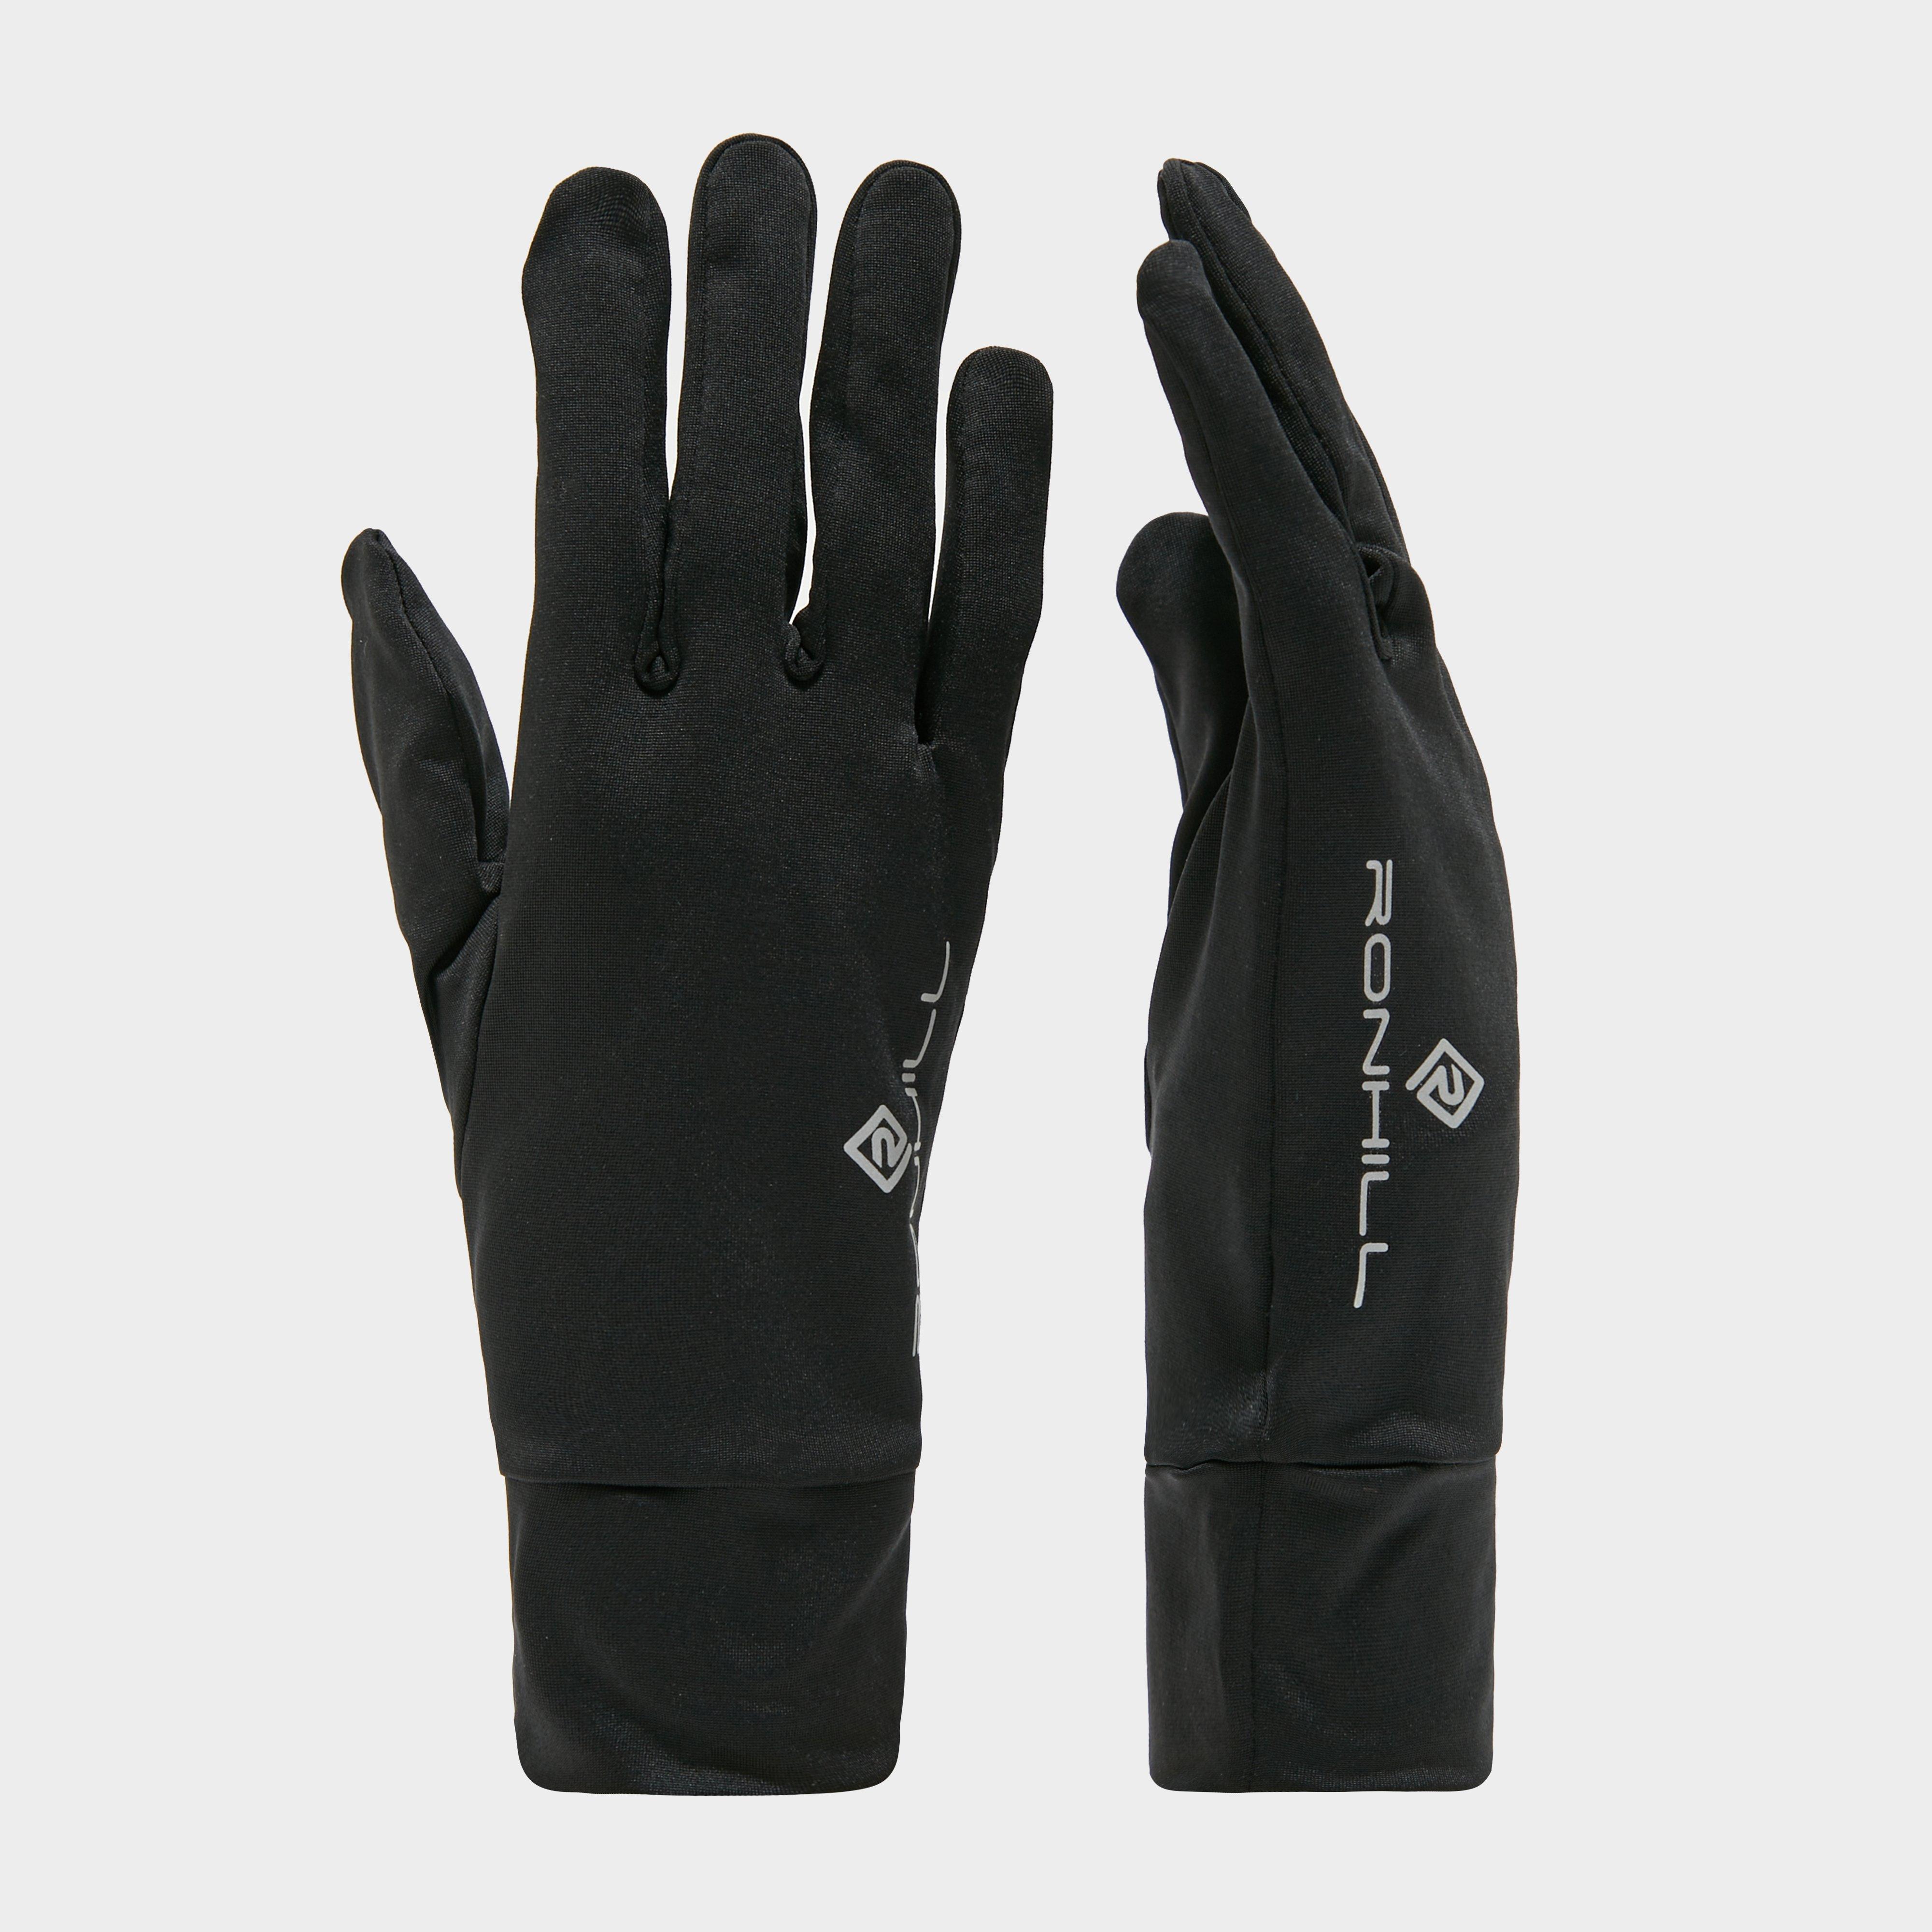 Ronhill Classic Ronhill Gloves - Black/black  Black/black